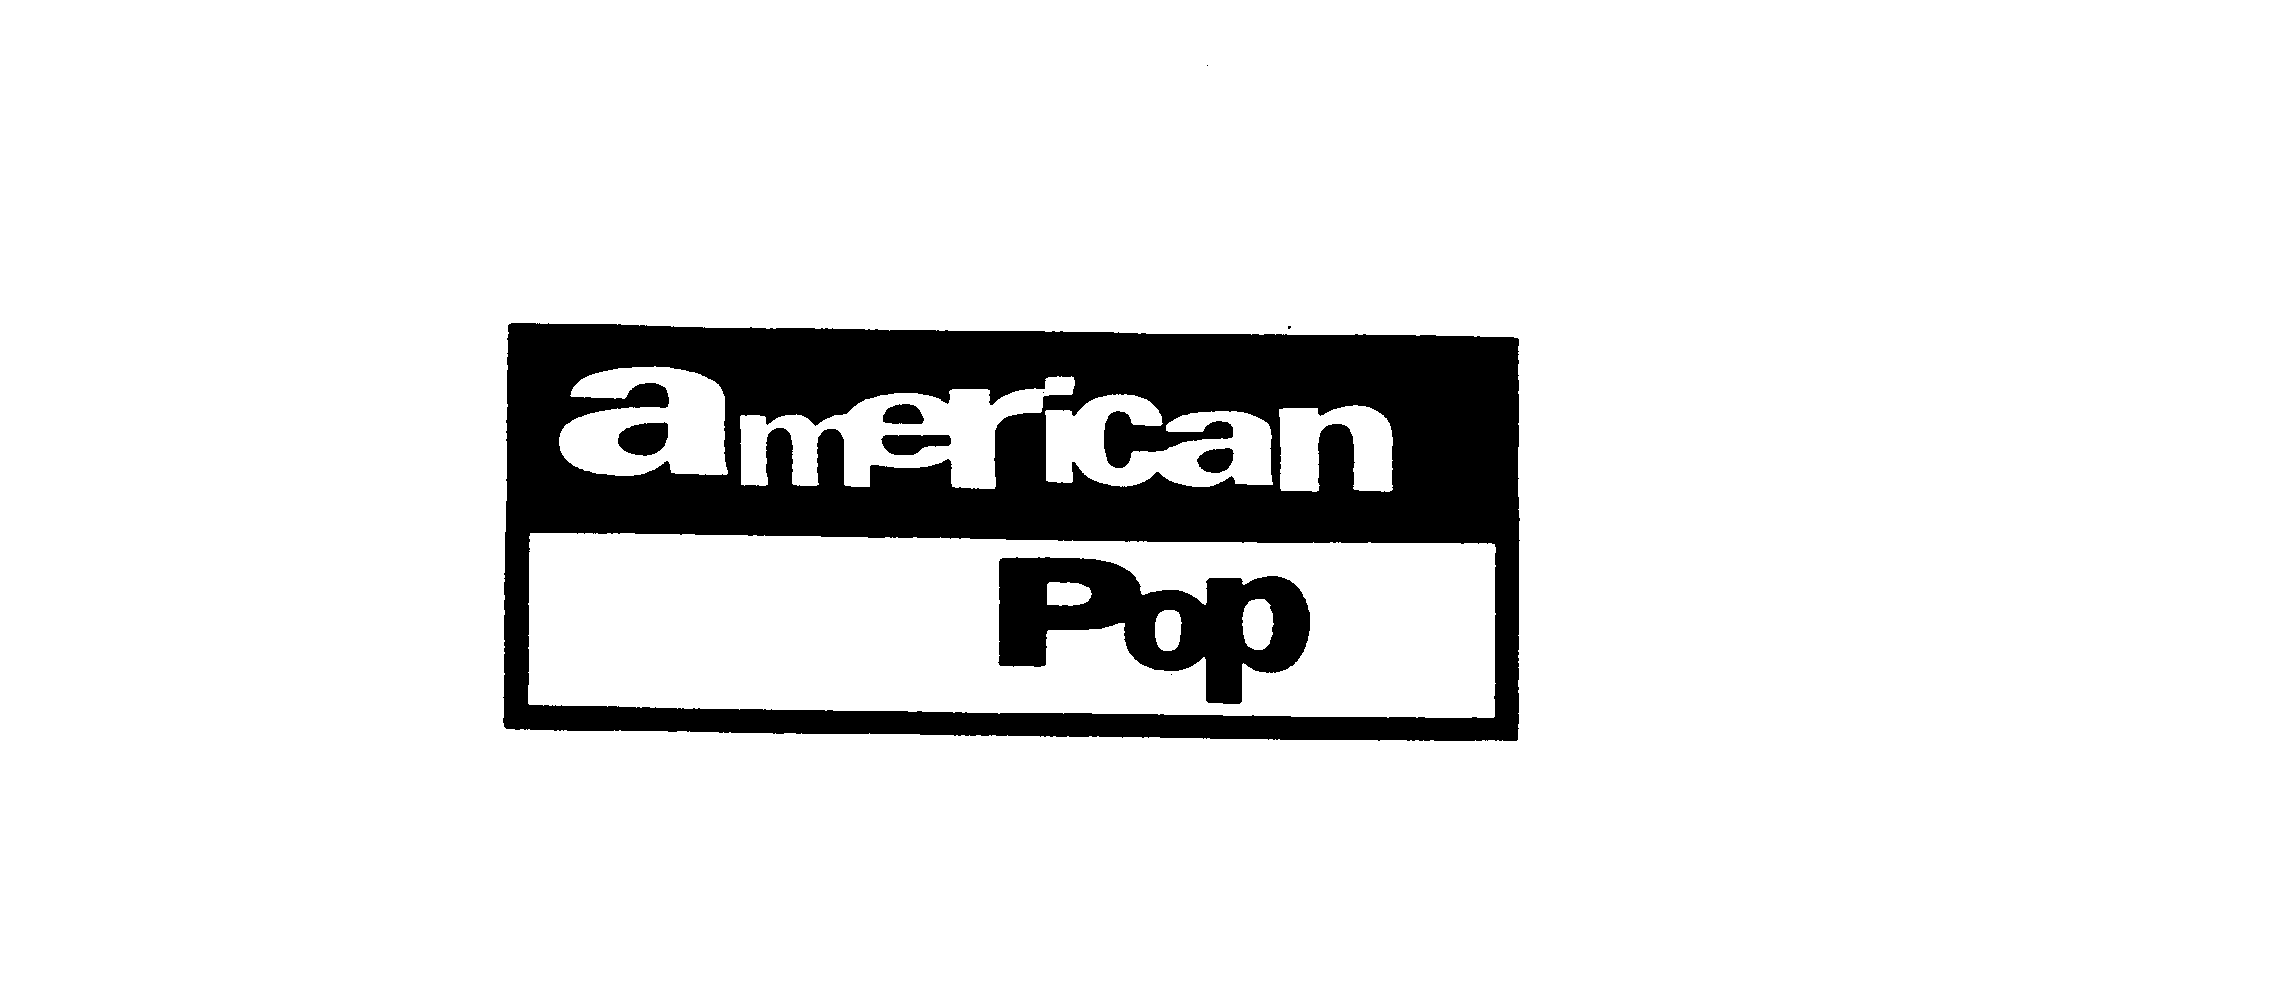  AMERICAN POP